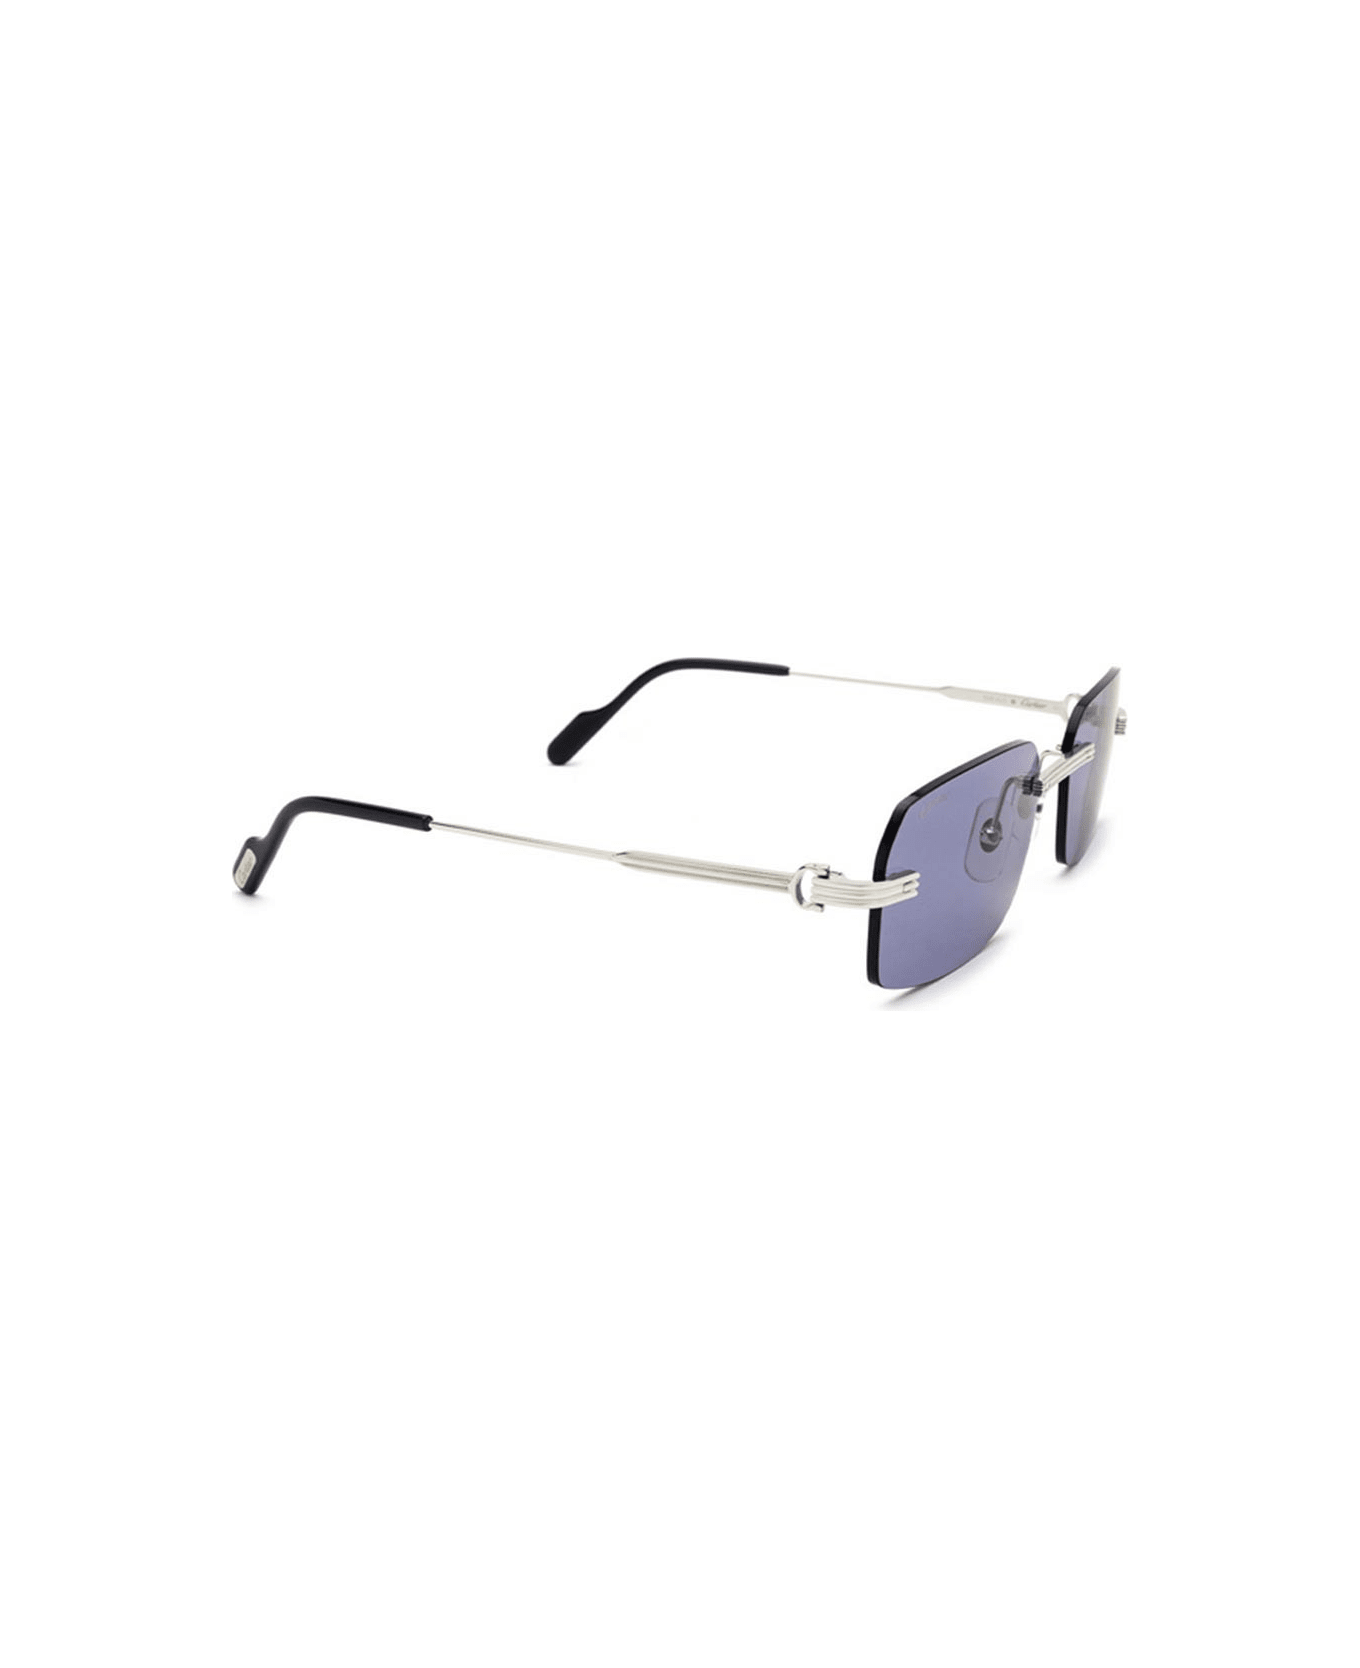 Cartier Eyewear Sunglasses - Silver/Blu